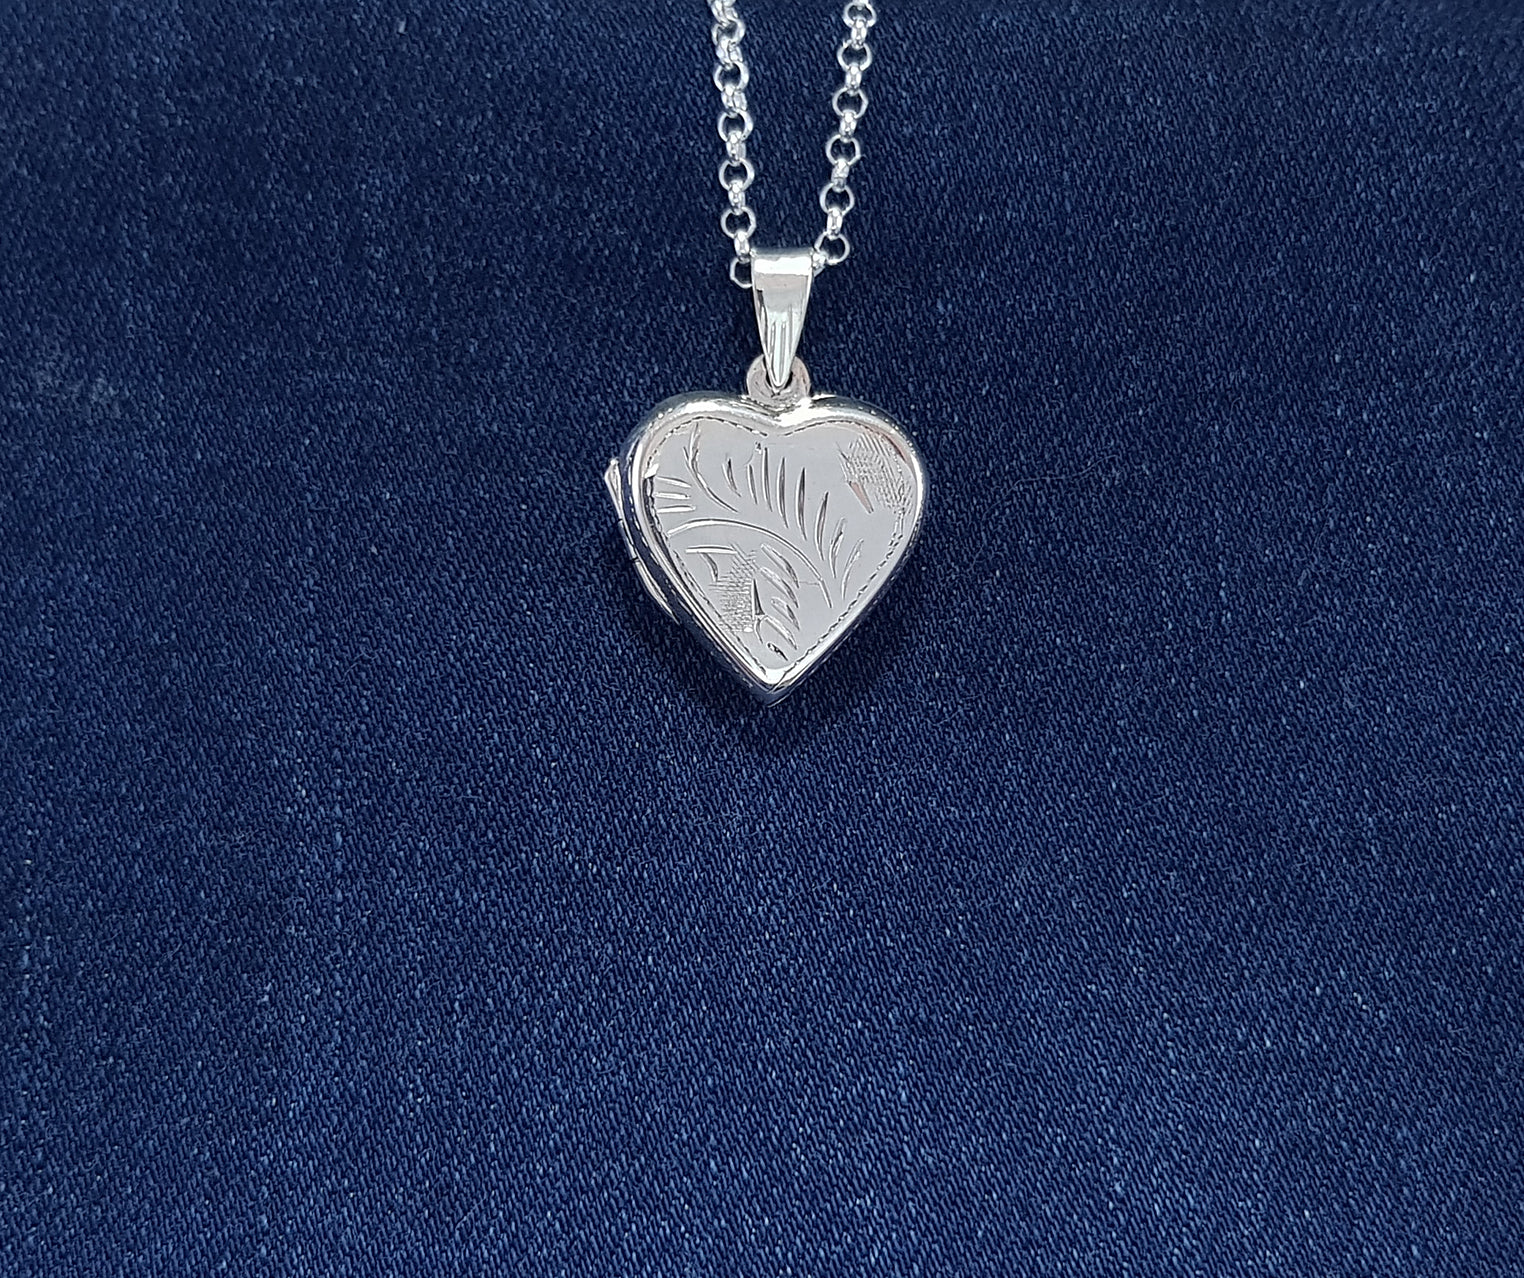 Small Heart Locket - Sterling Silver 